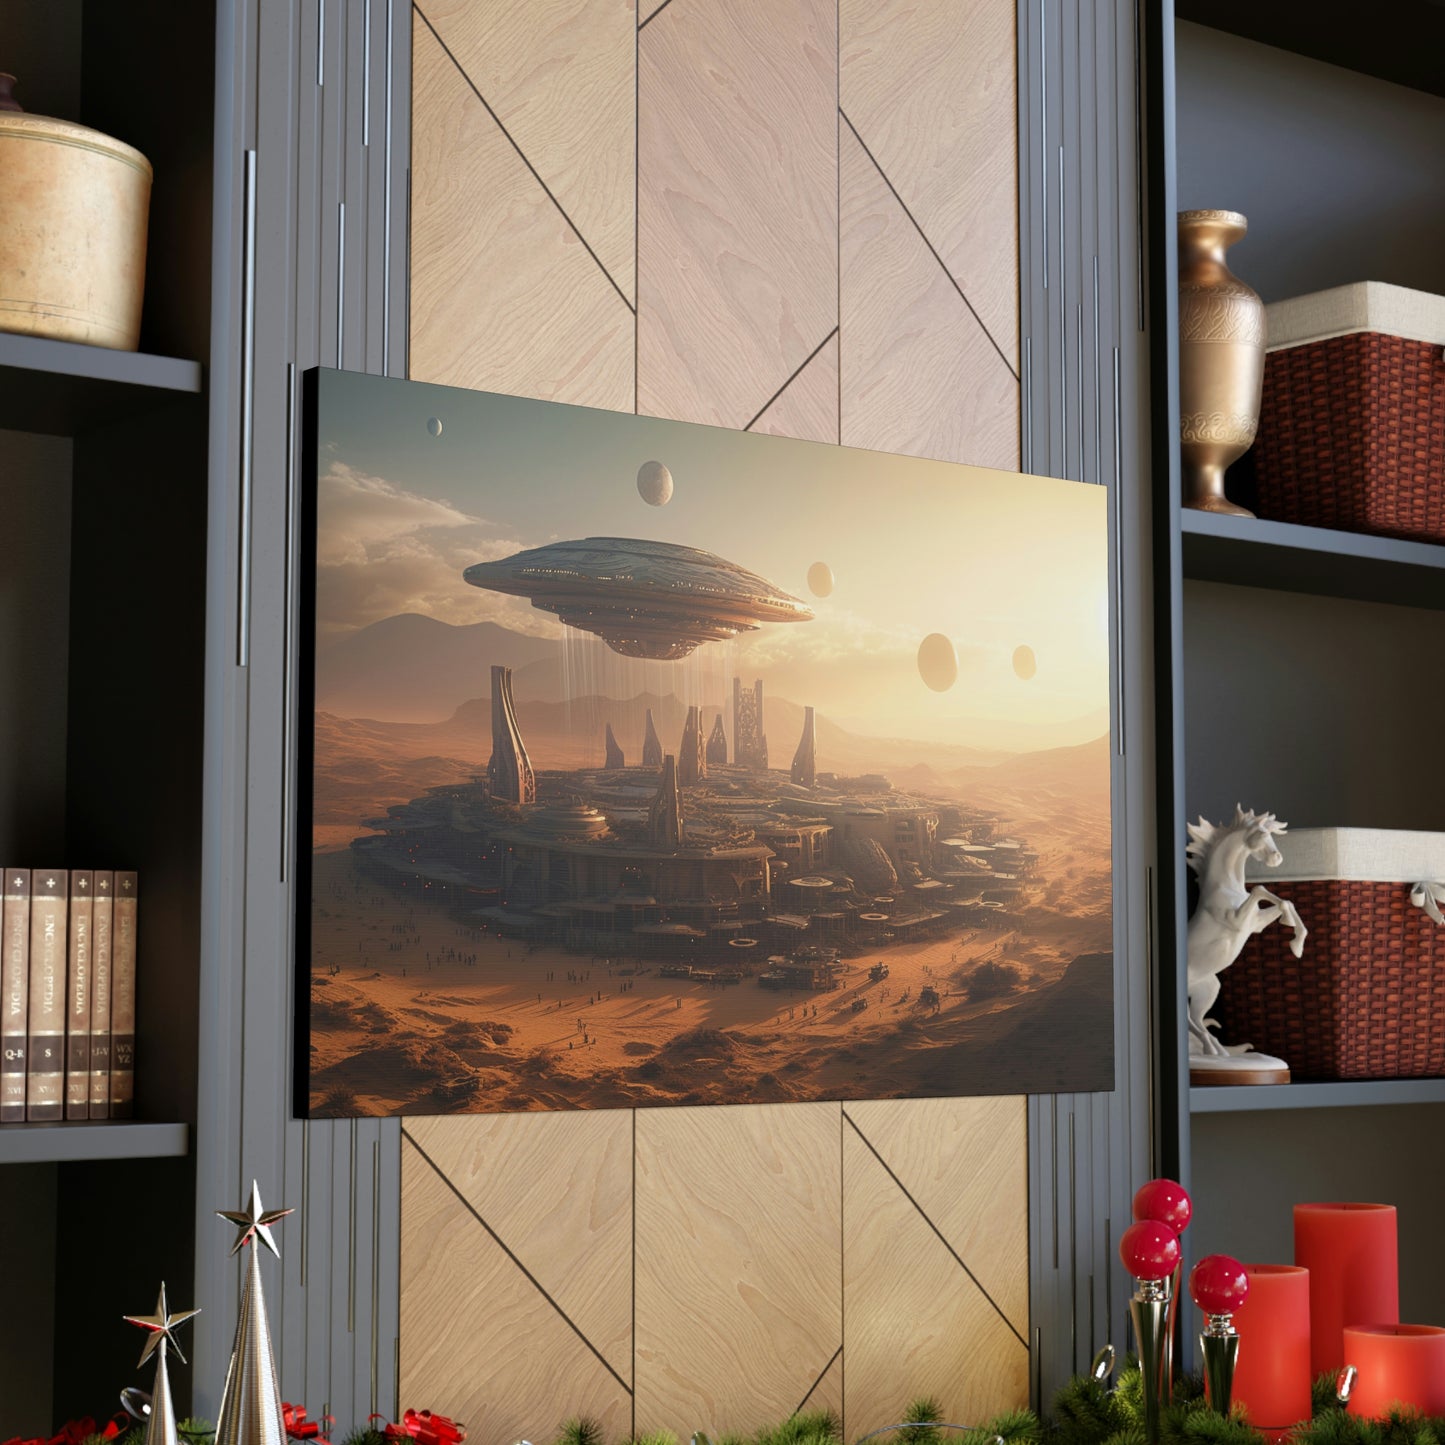 Desert City With Alien Spaceship Landing Wall Art